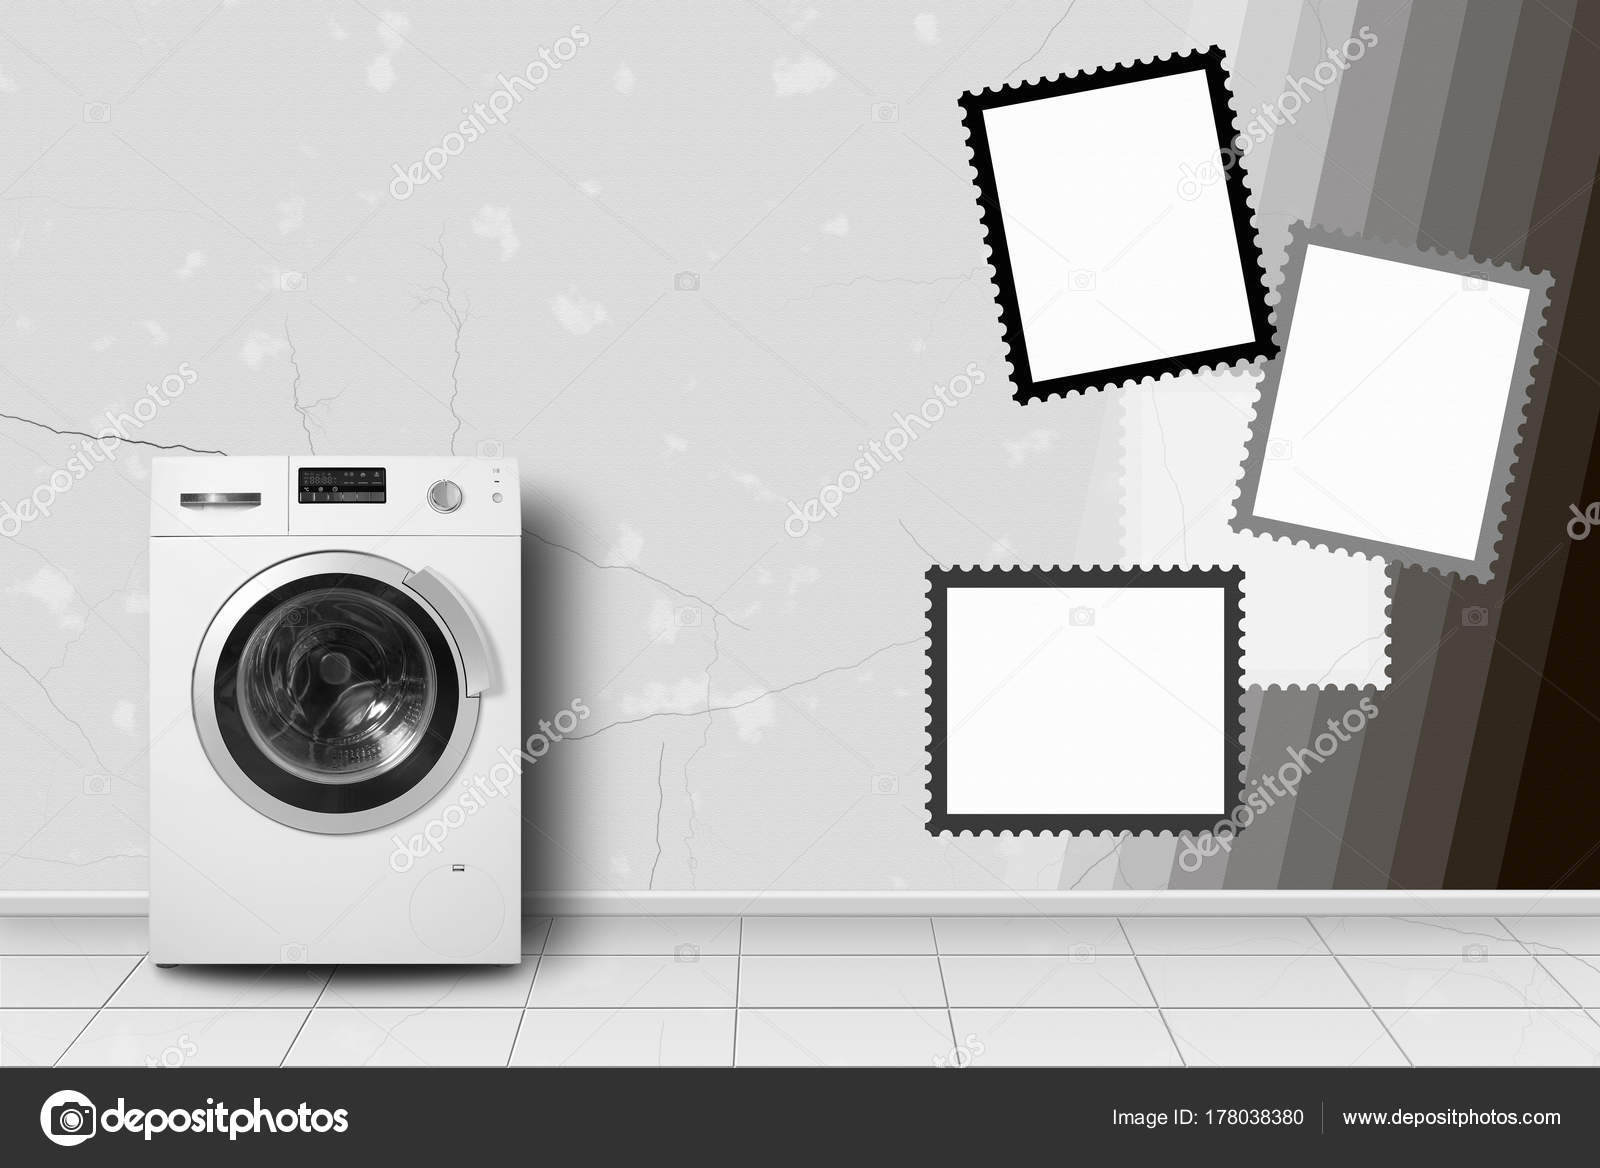 Home Appliance Washing Machine In Home Interior Frames